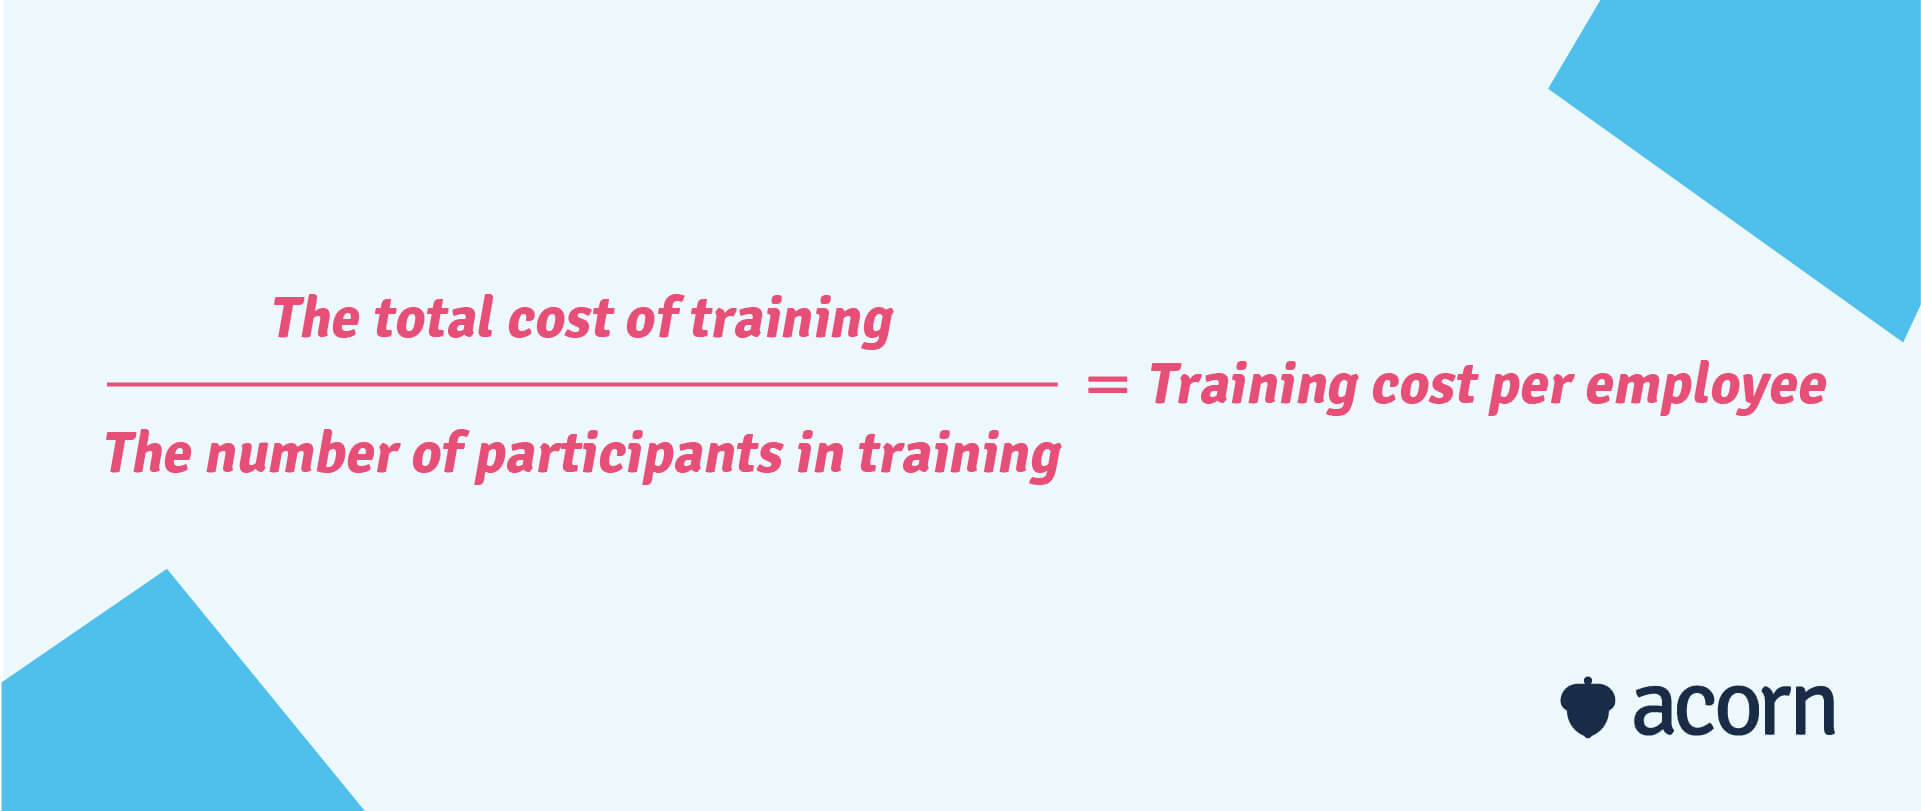 The training cost per employee formula